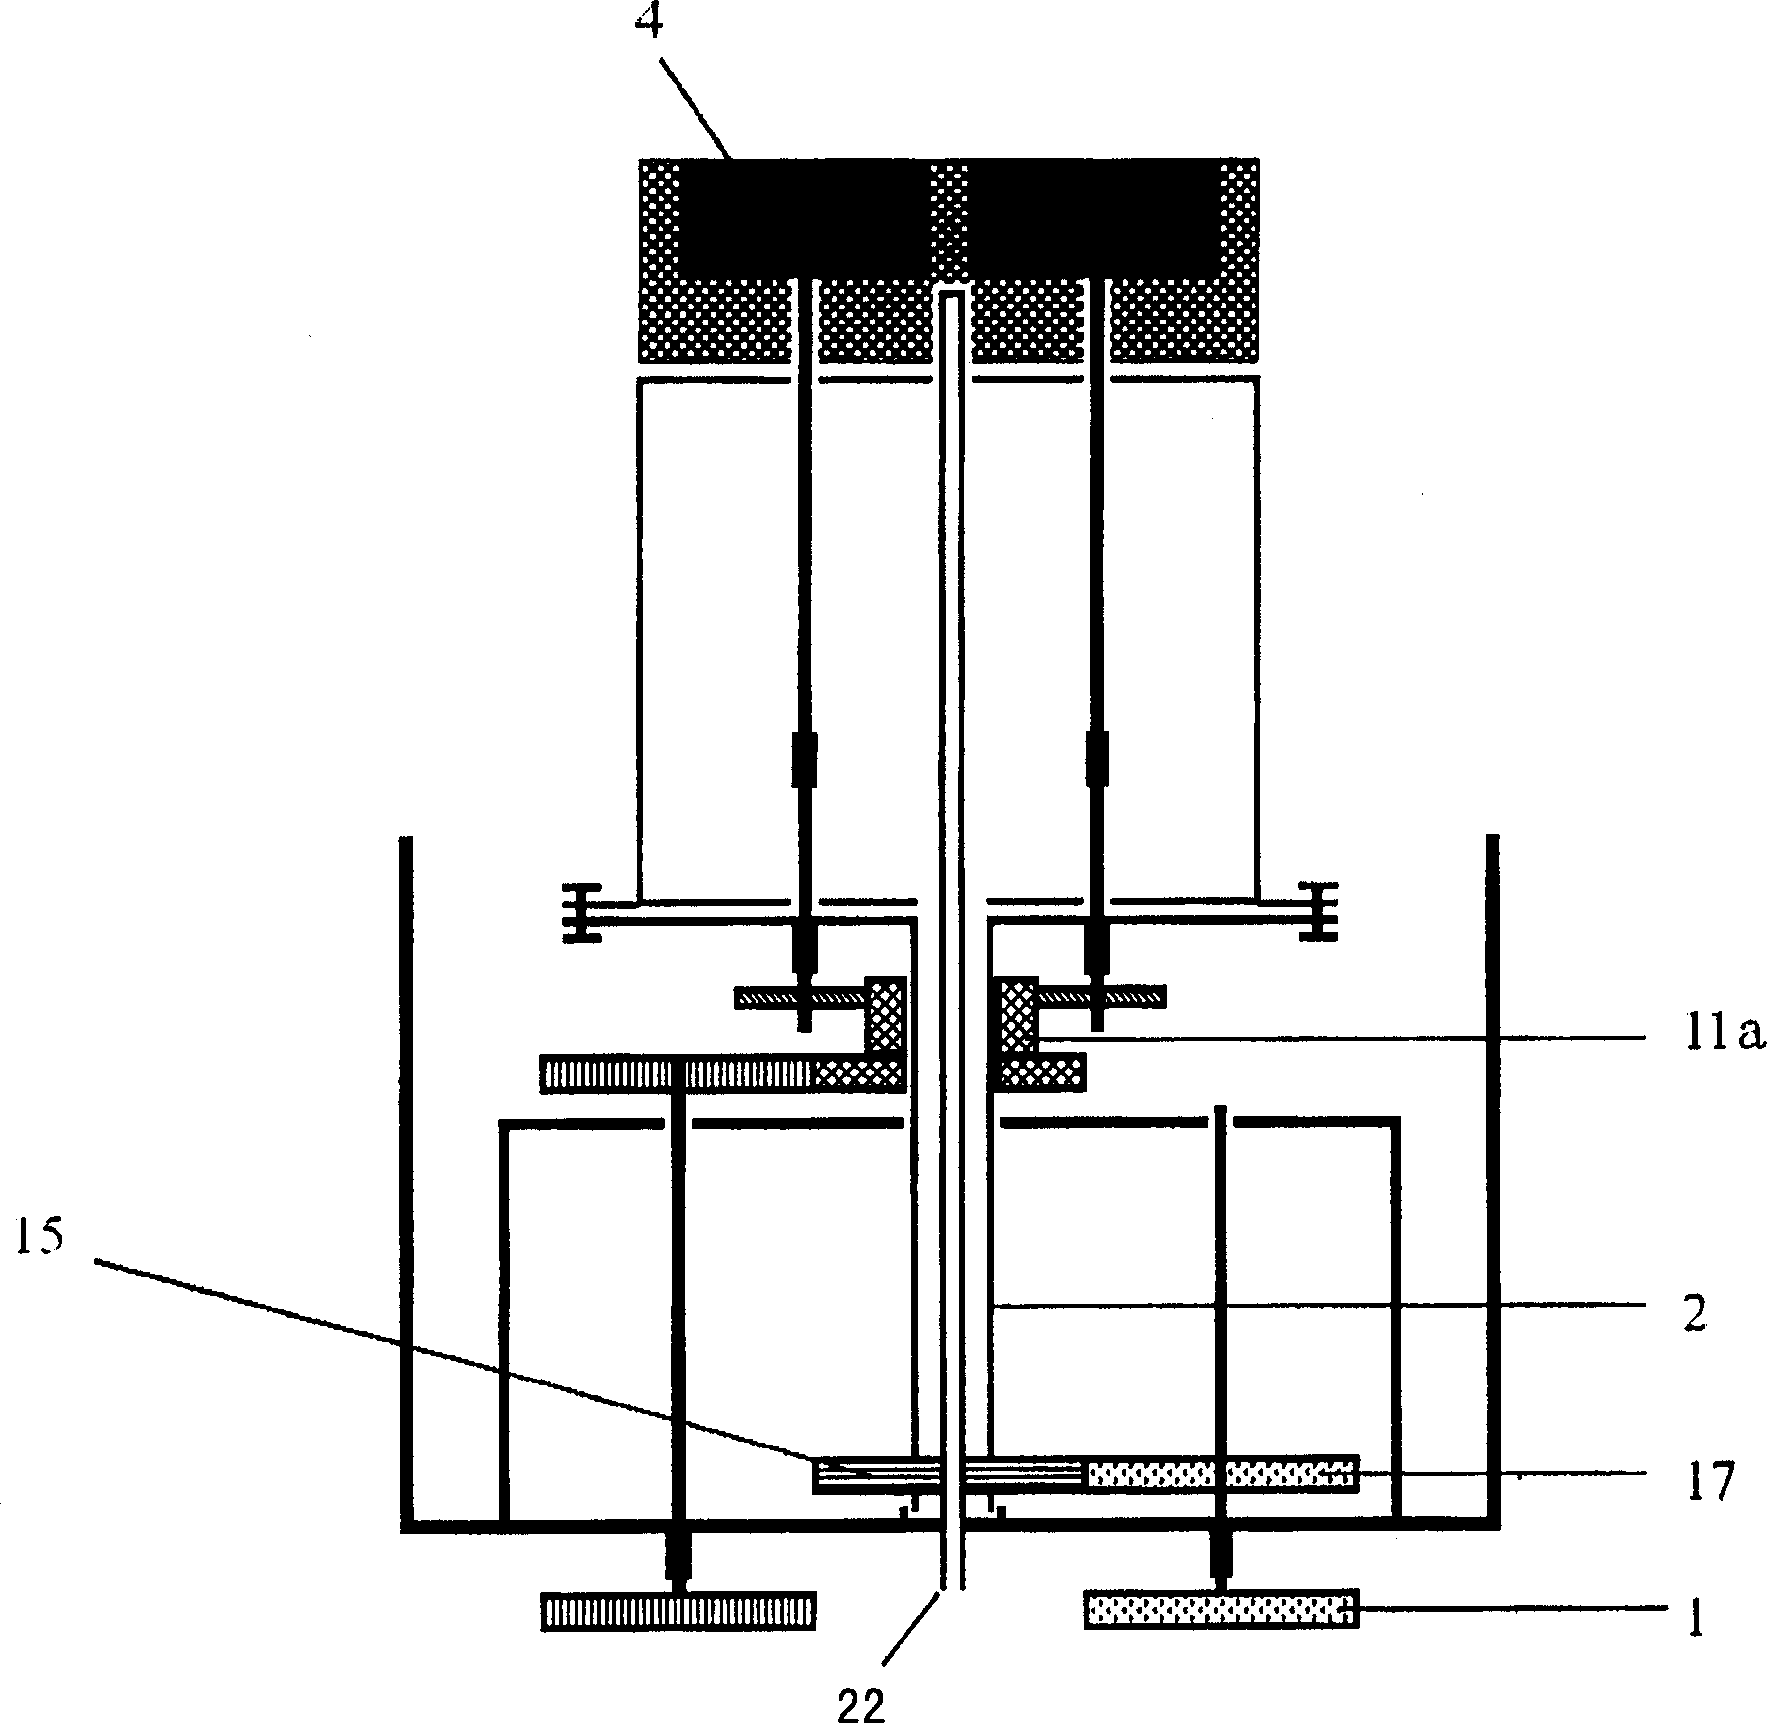 Revolution and rotation arrangement in reaction chamber of metallorganics chemical vapor deposition device